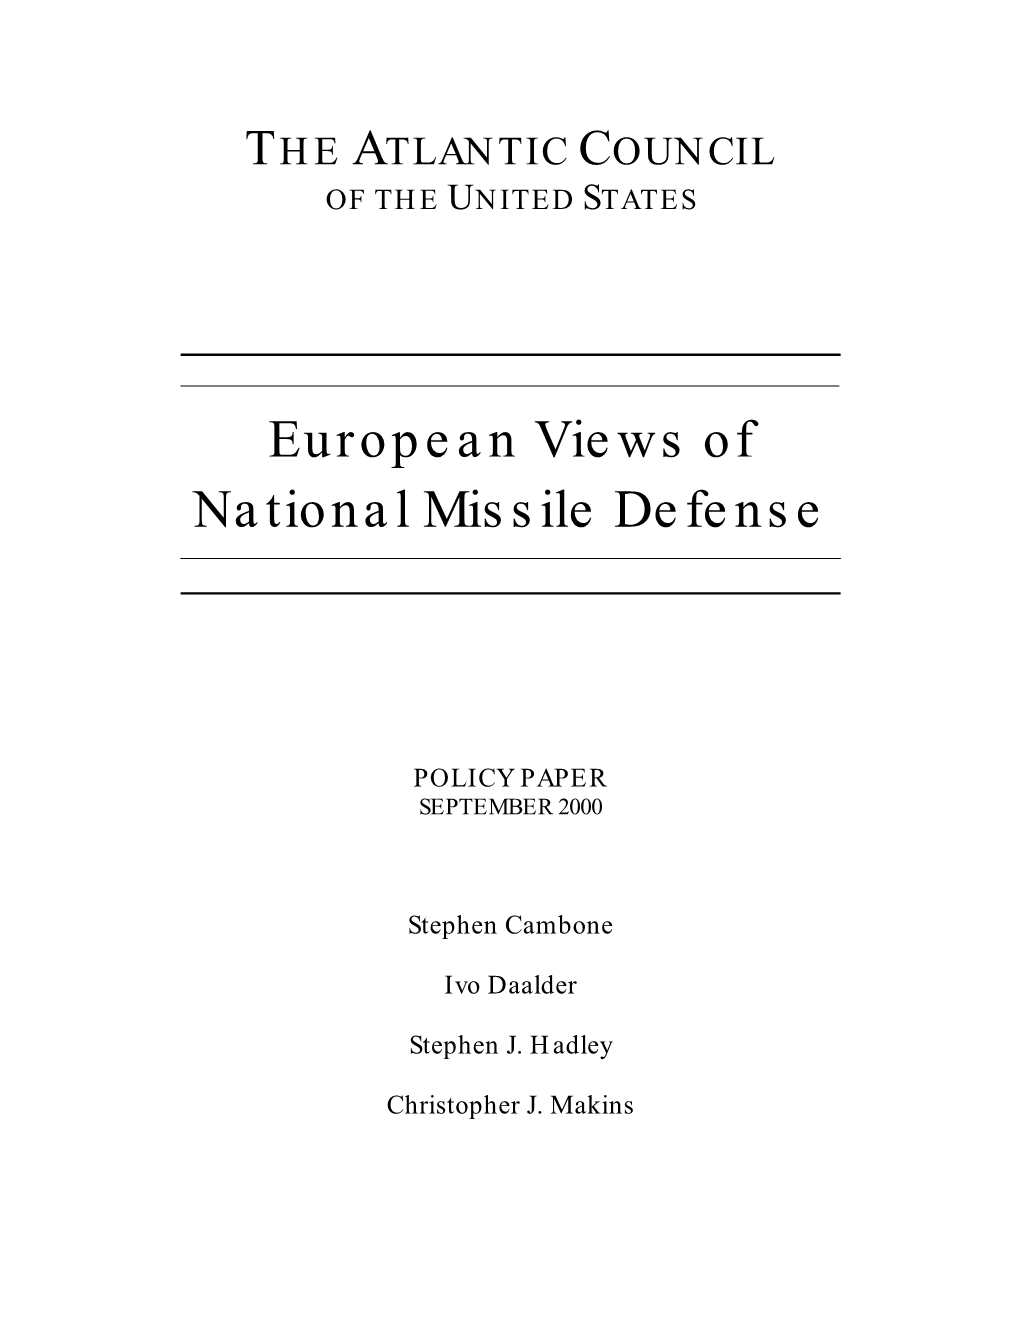 European Views of National Missile Defense